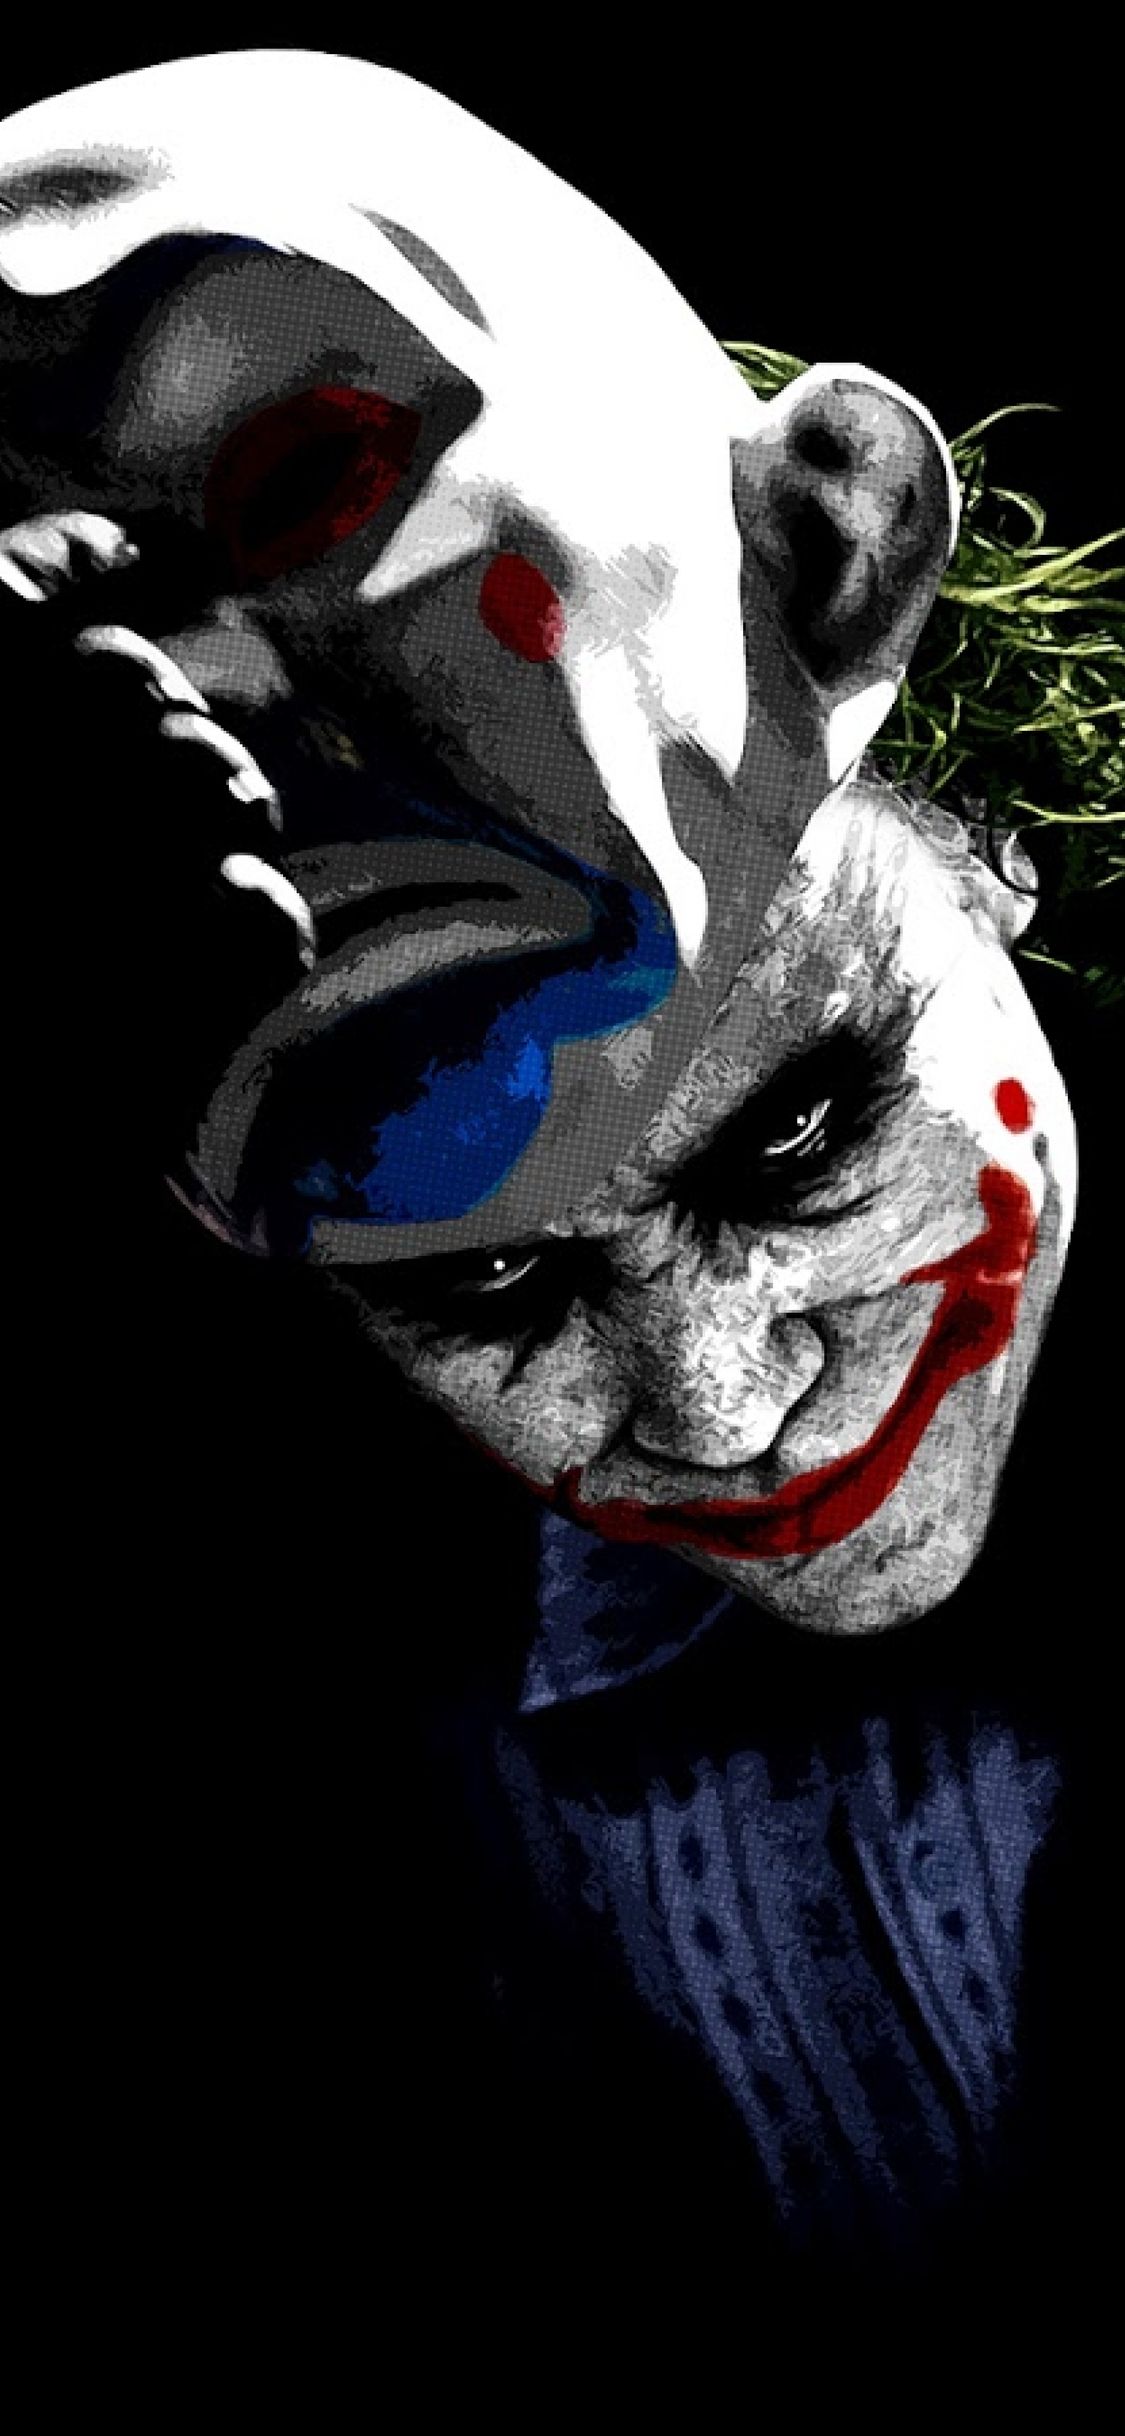 HD iPhone Joker Wallpaper 75 images